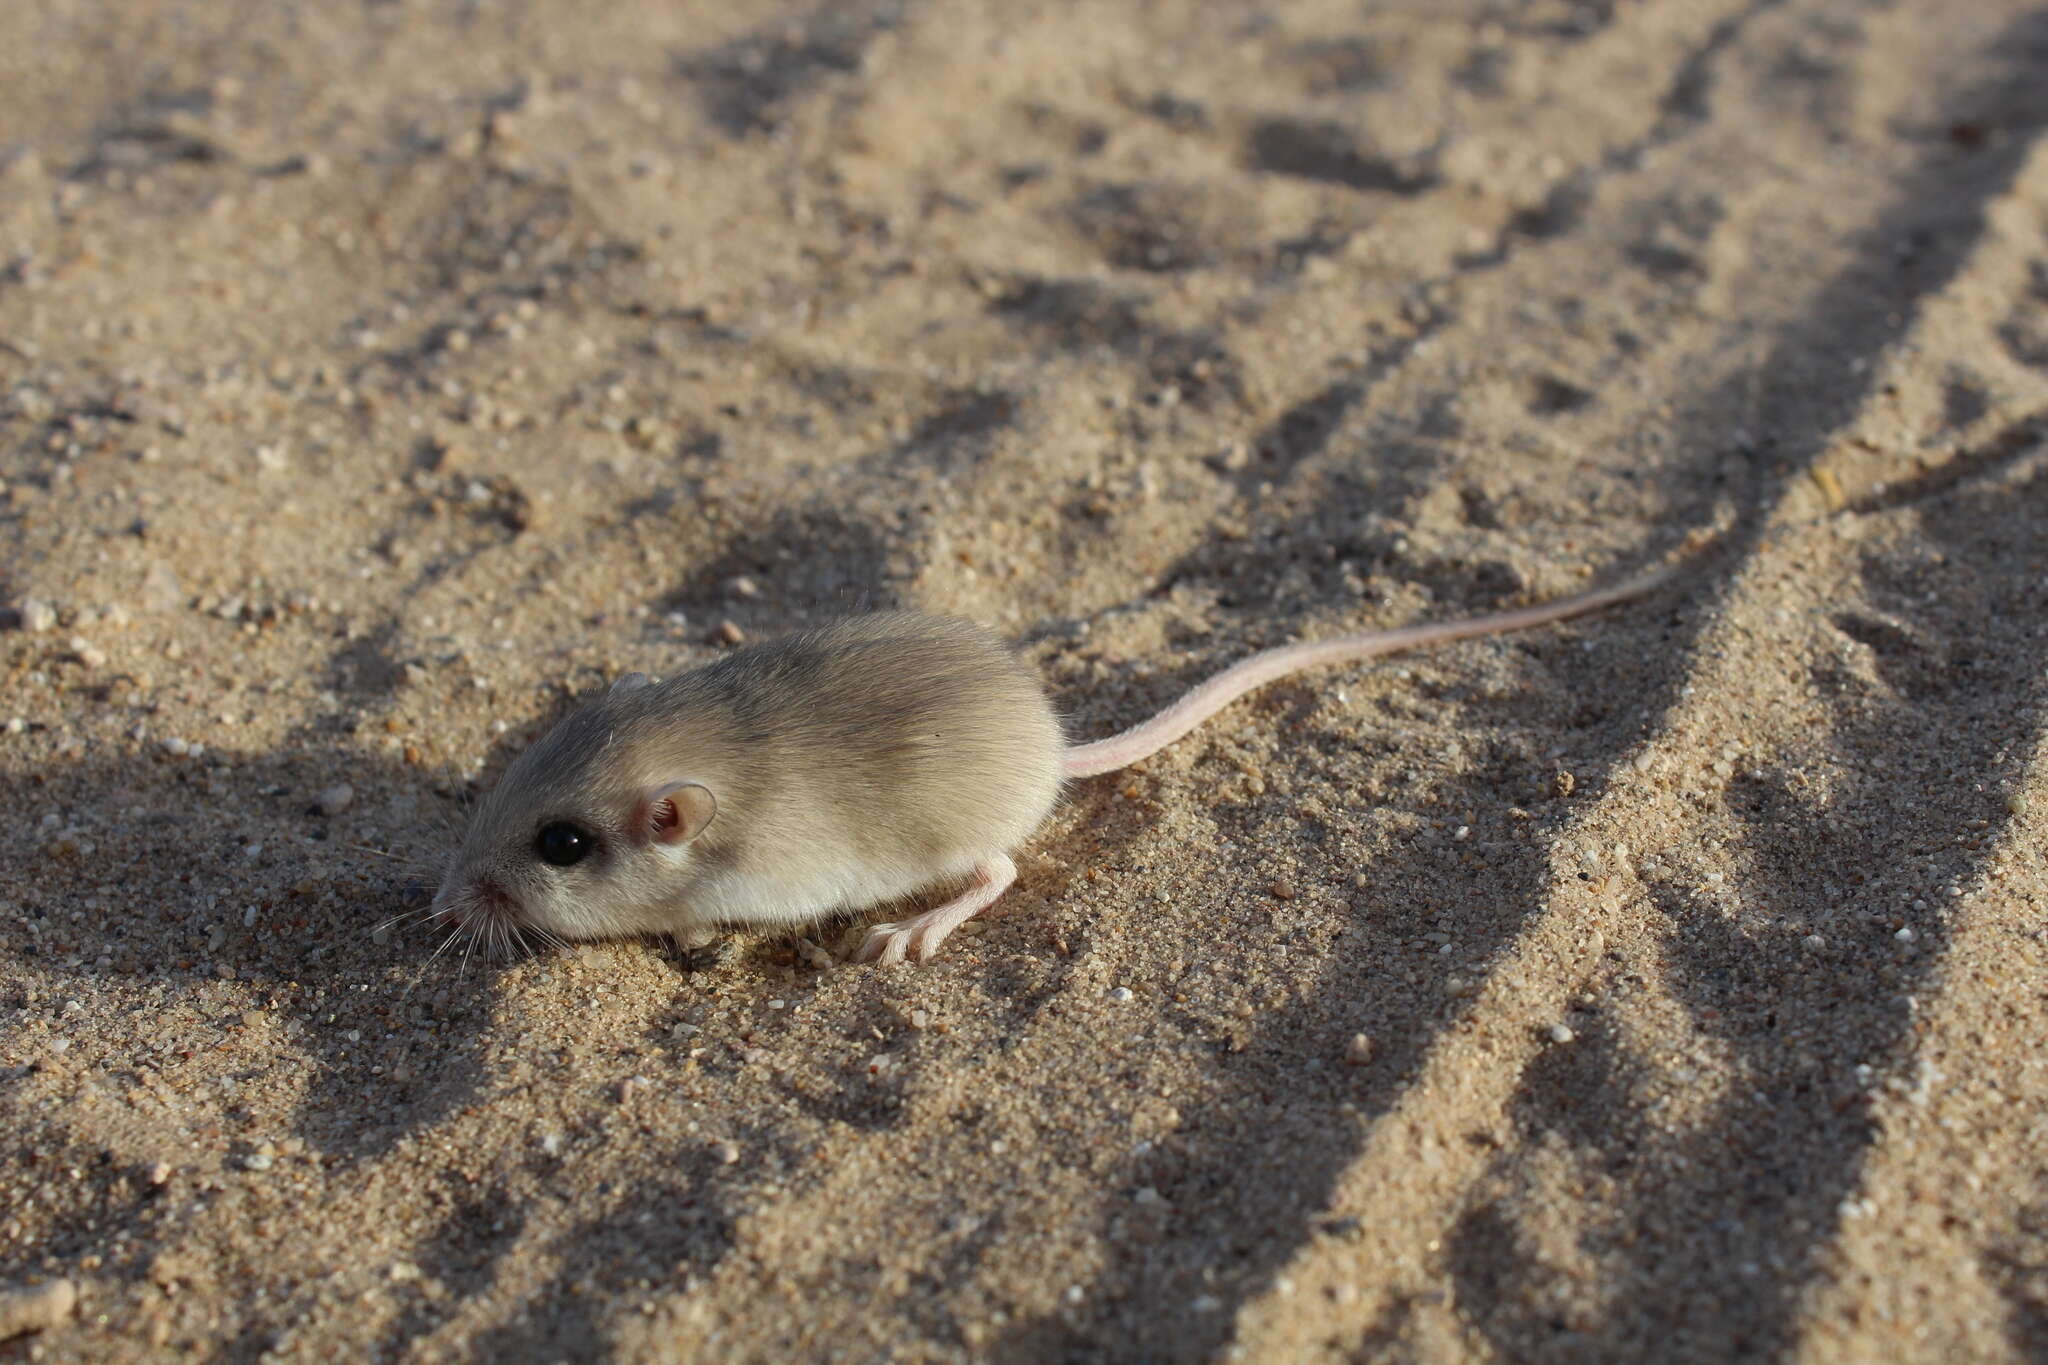 Image of Little Pocket Mouse